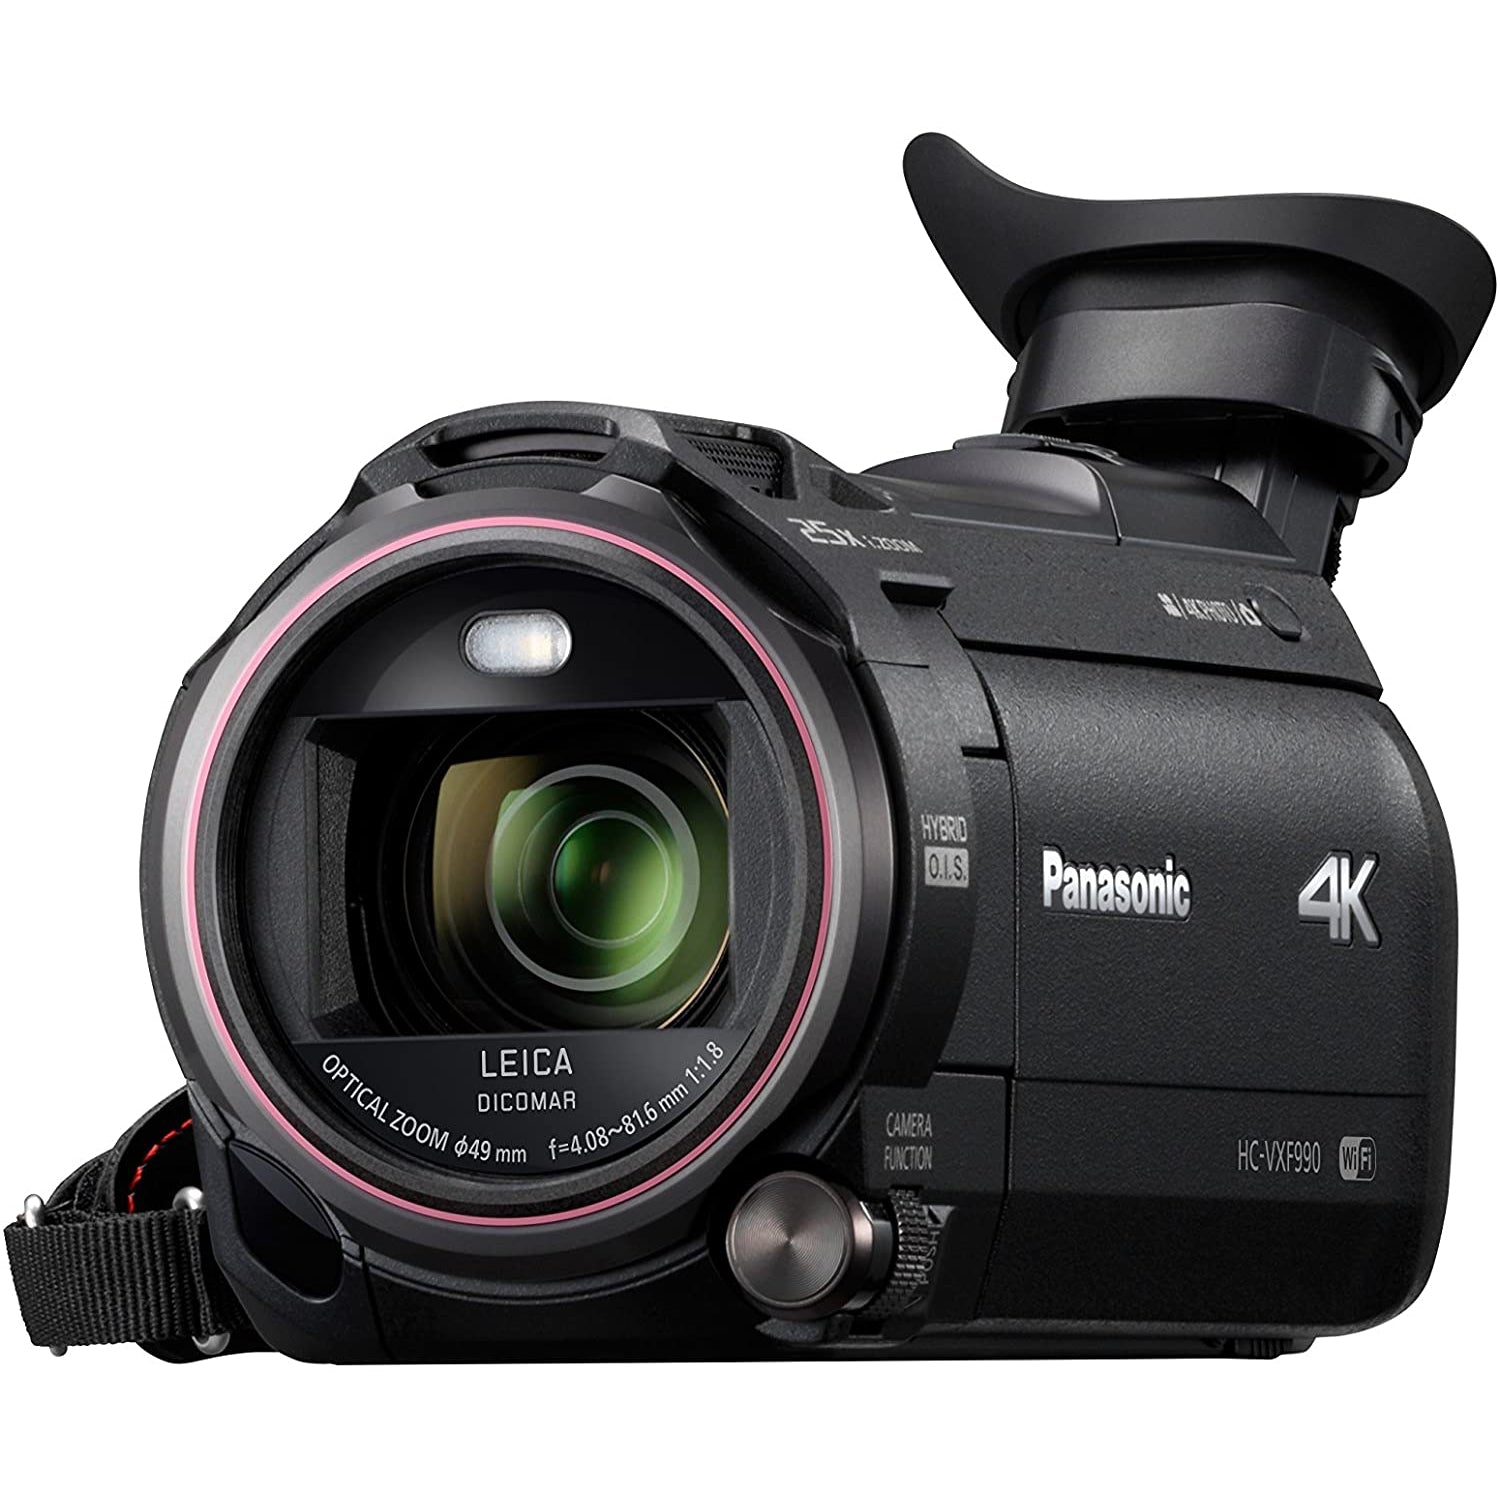 Panasonic 4K Camcorder with Wireless Multi Camera Function - Black